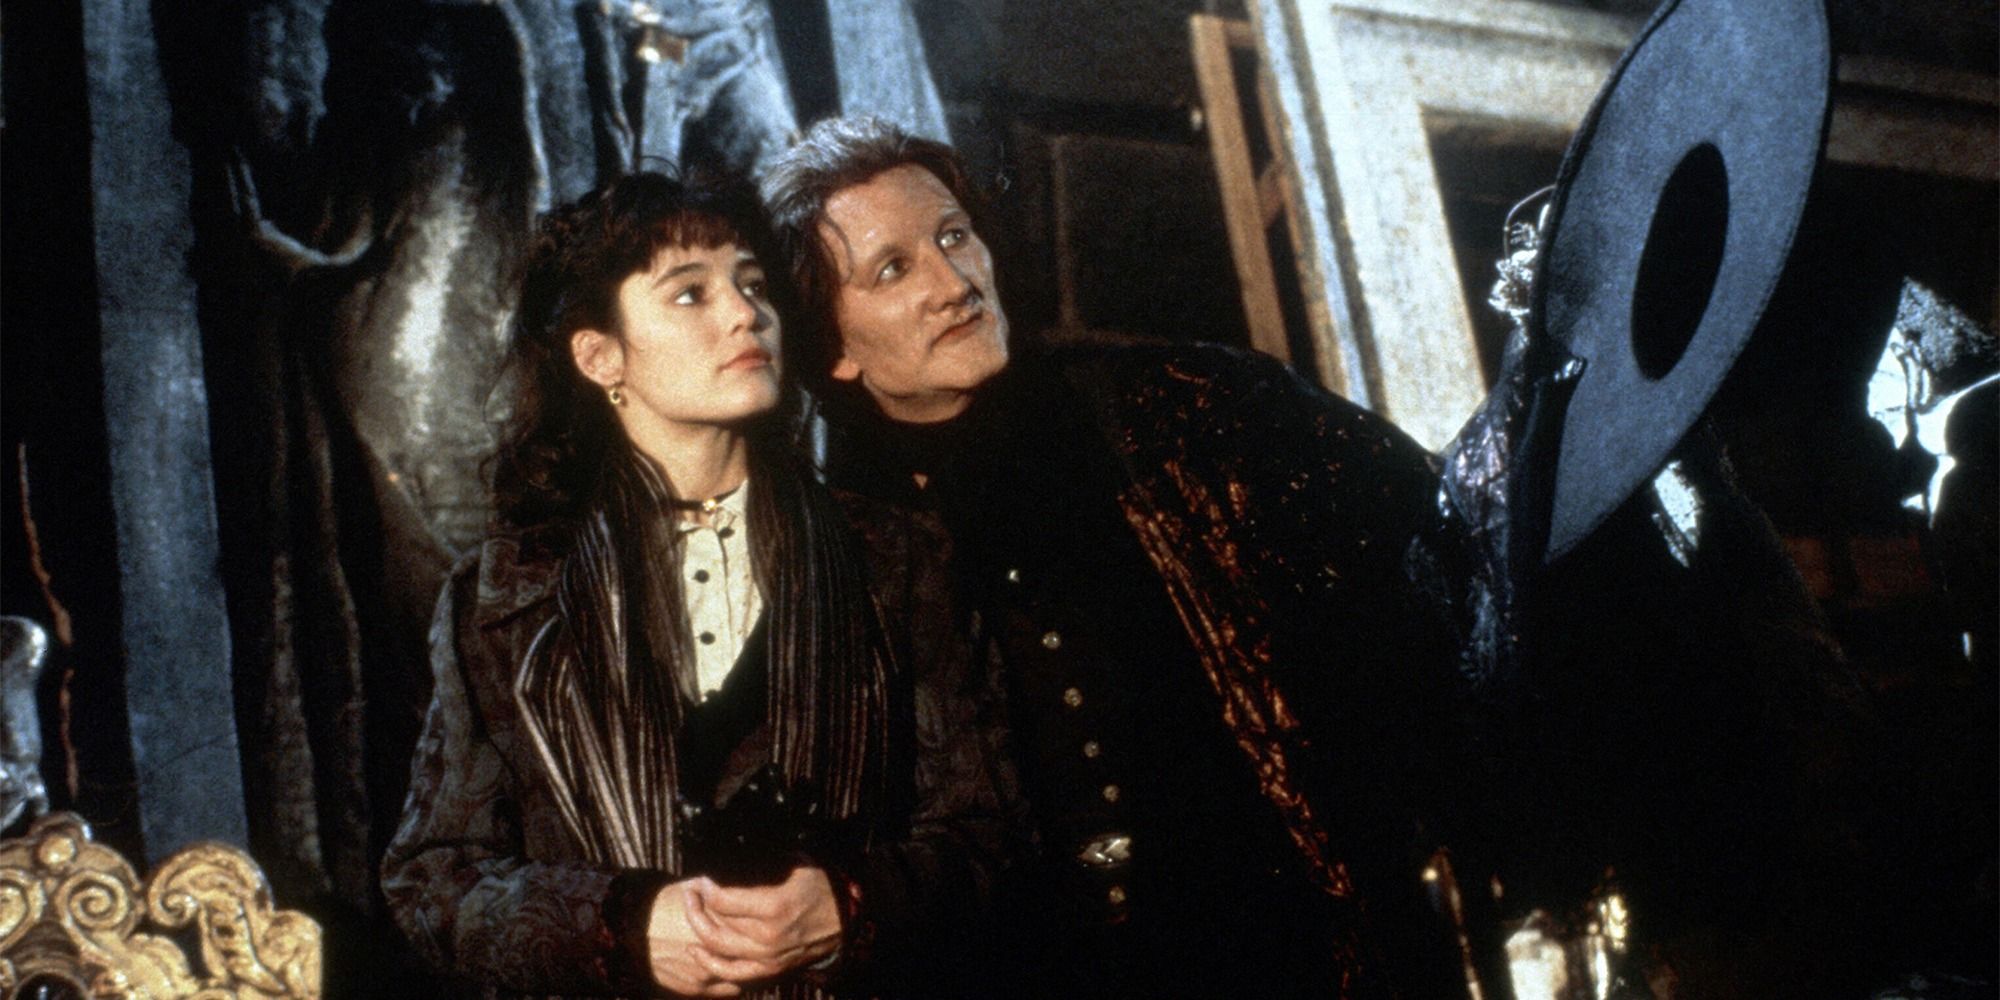 Robert Englund and Jill Schoelen looking at something in 1989 Phantom of the Opera